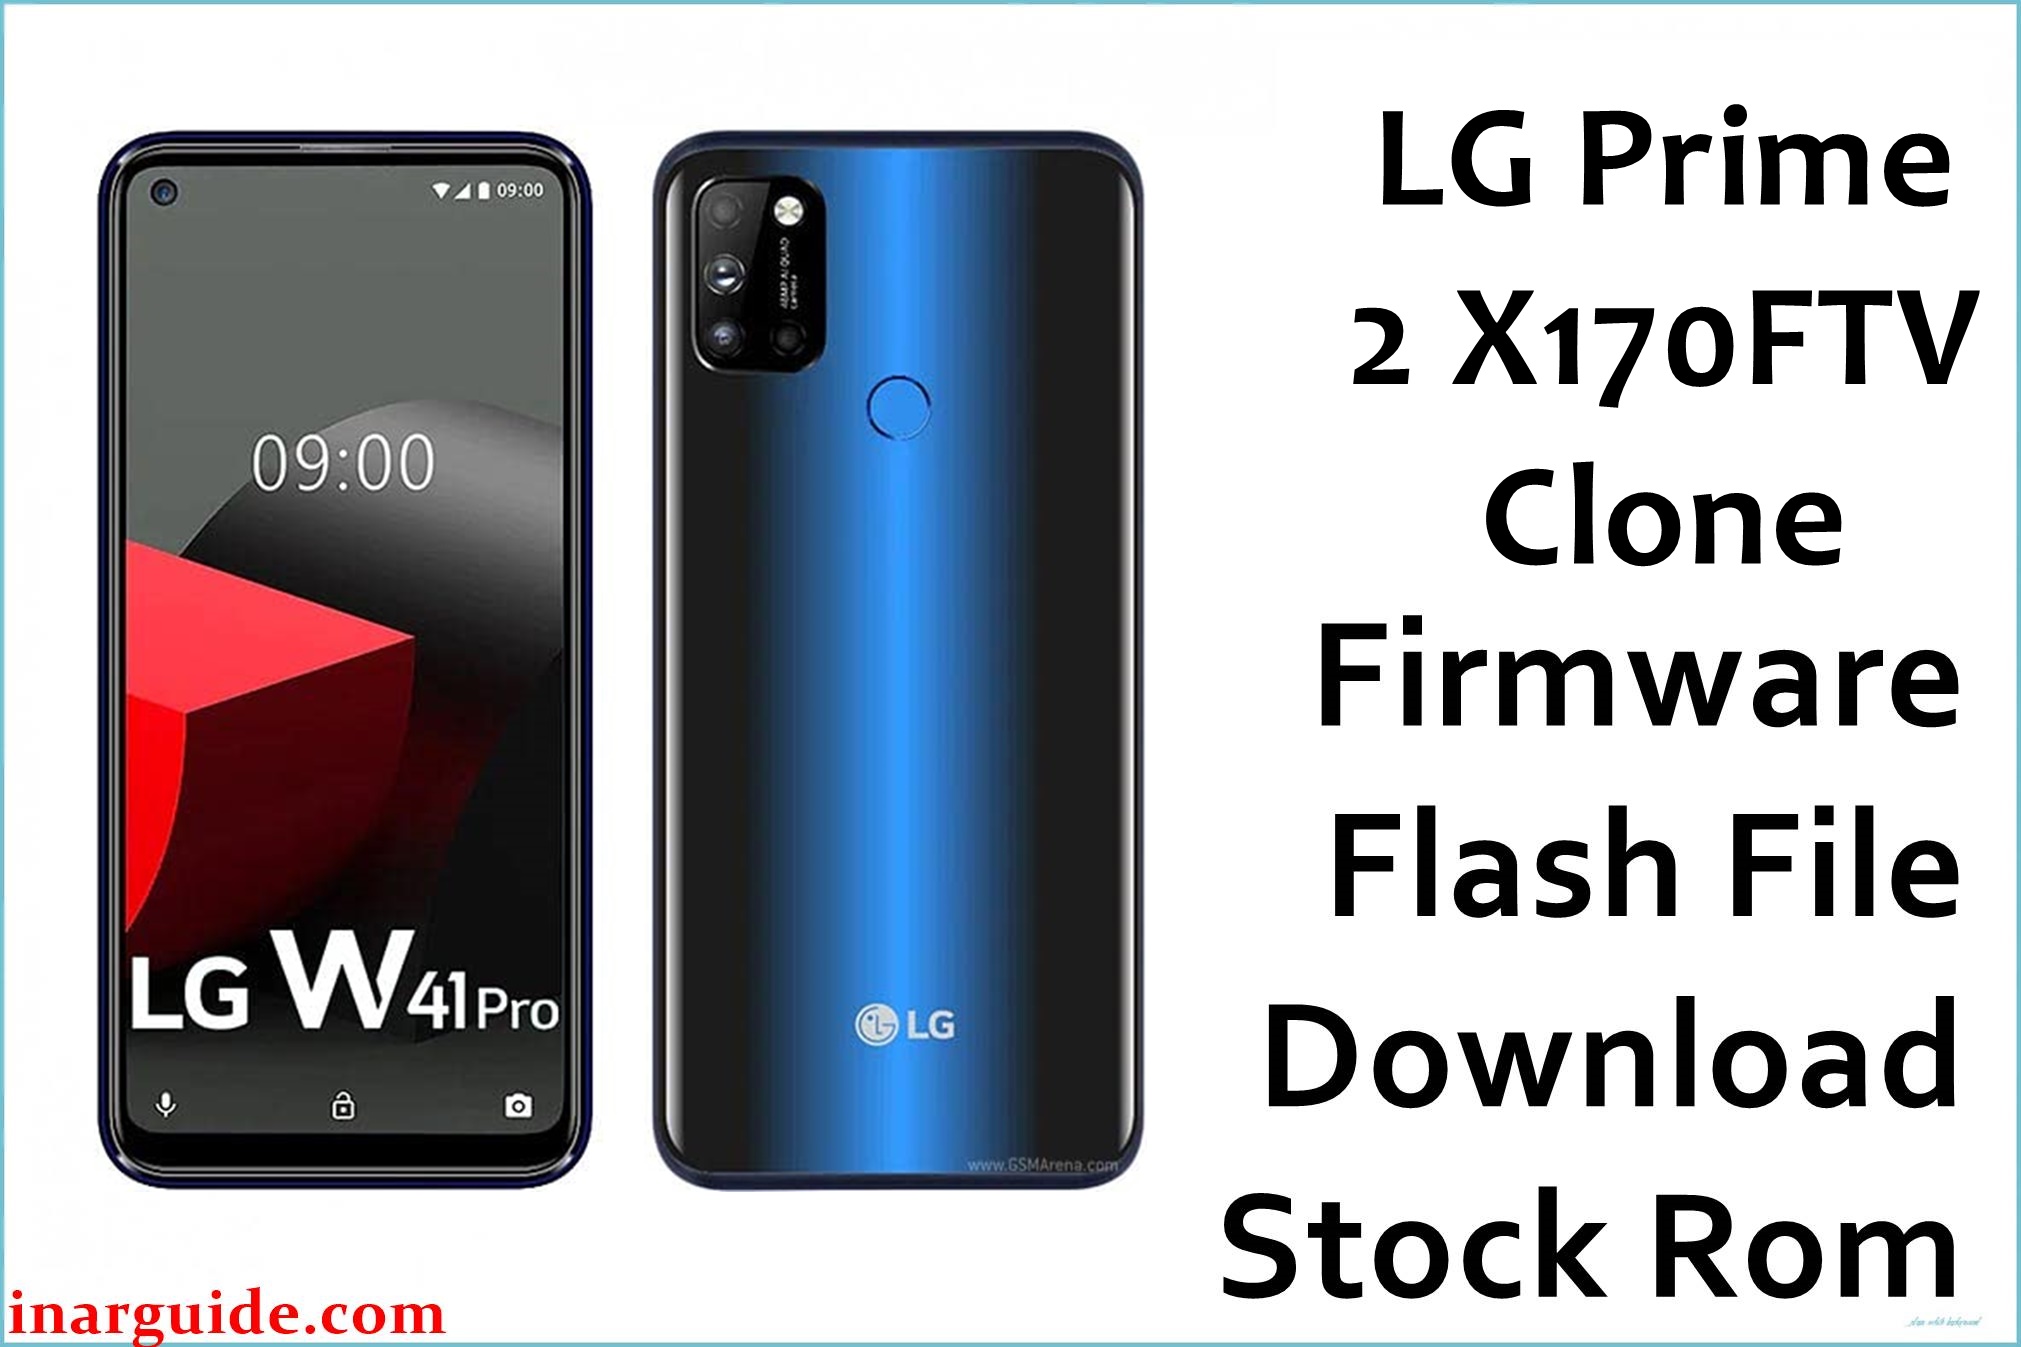 LG Prime 2 X170FTV Clone